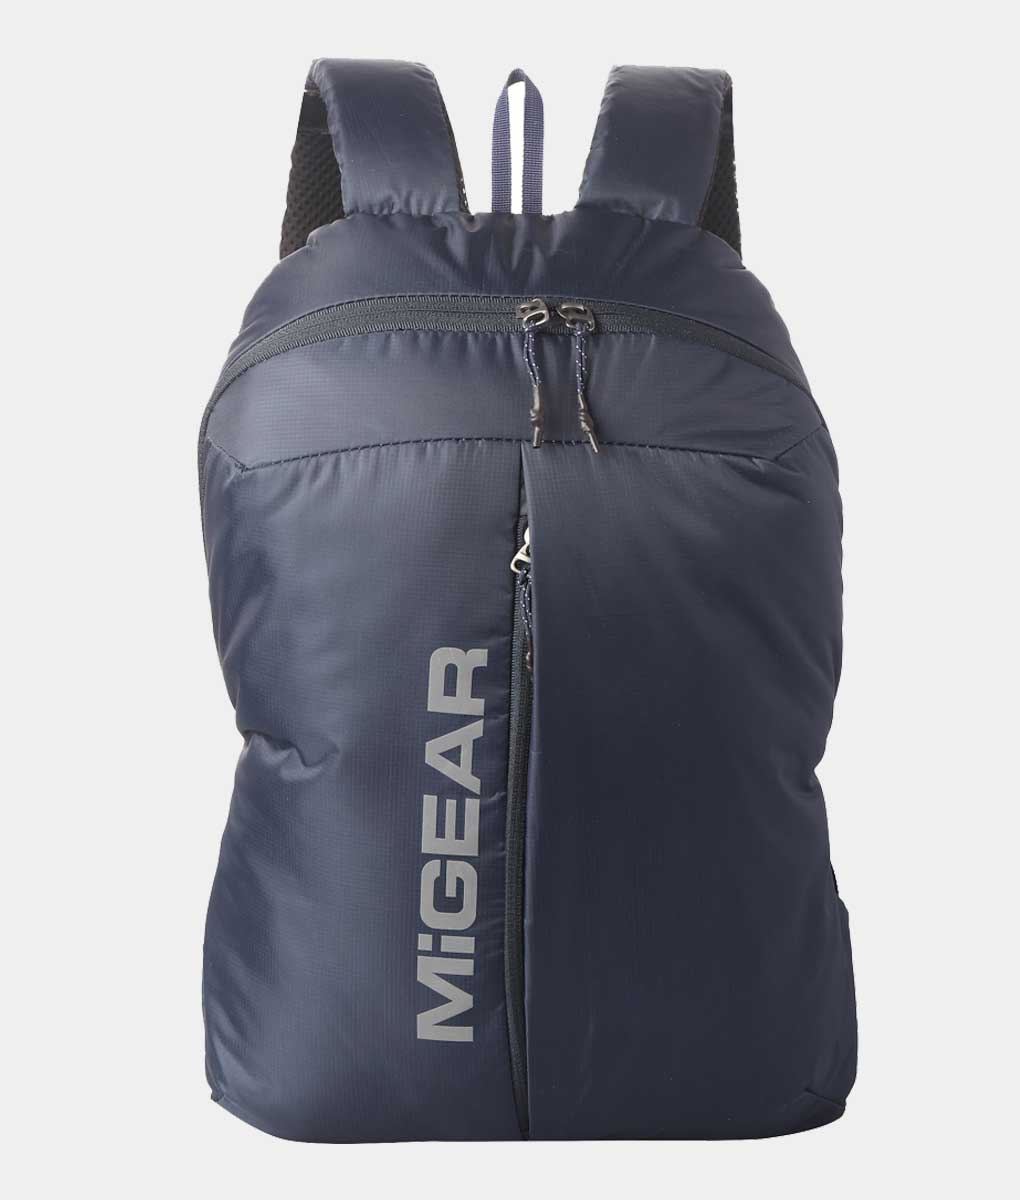 The NavyGear Backpack